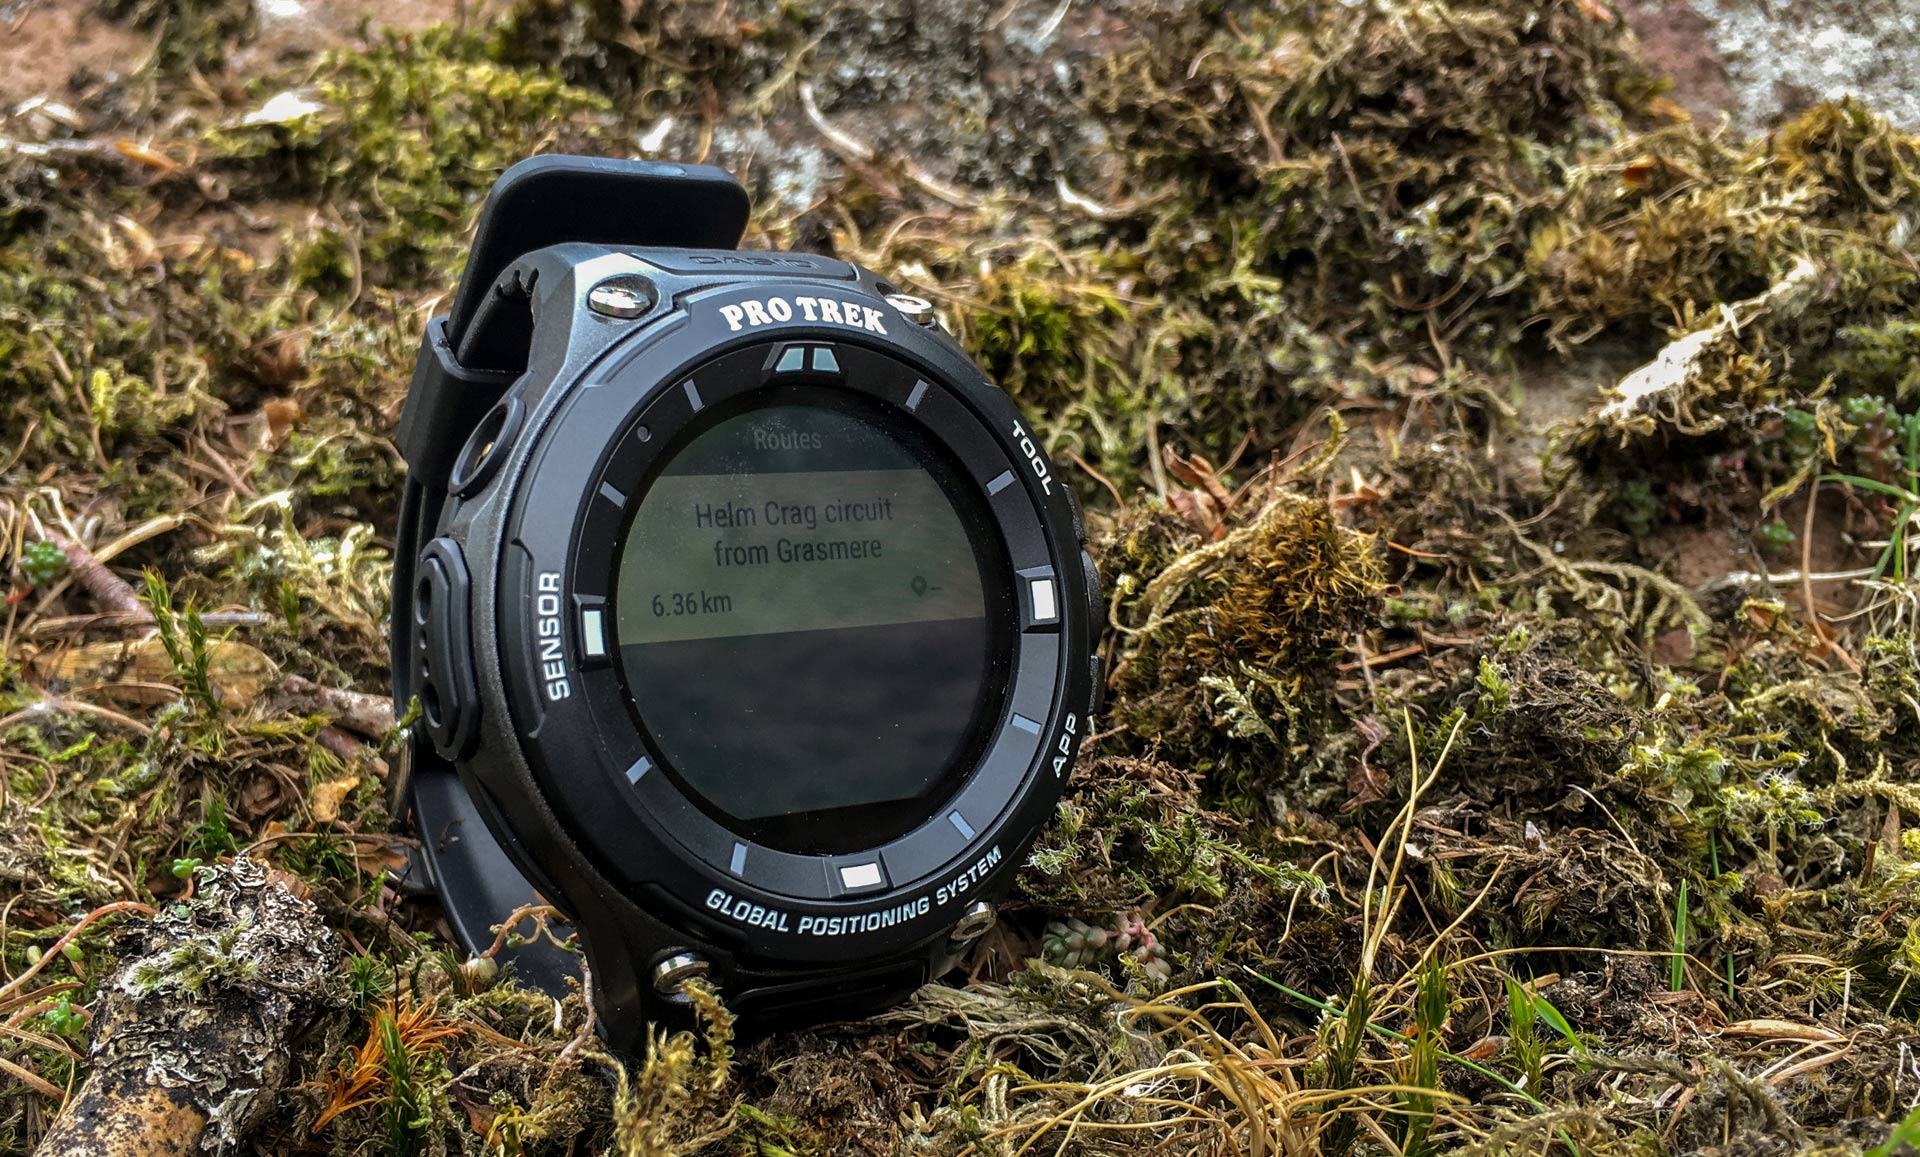 Casio Pro Trek outdoors smartwatch review